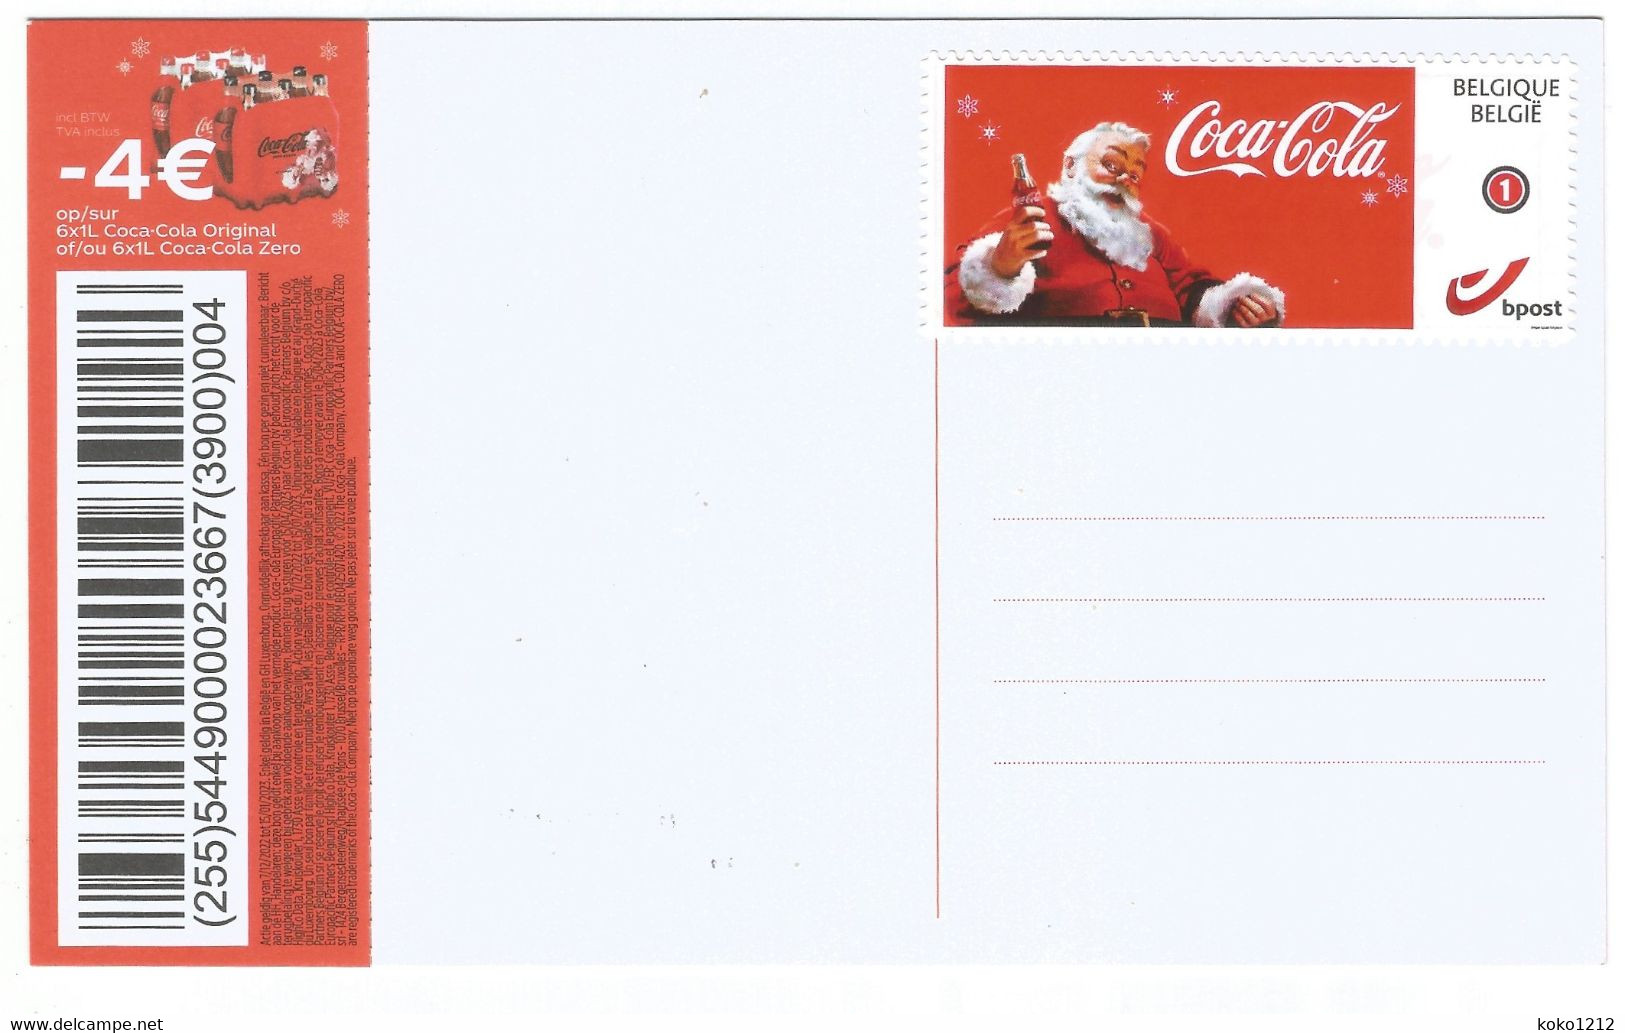 RARE CocaCola Belgium Postcard (1/2) With Private Stamp CocaCola NEUF - Postkaarten